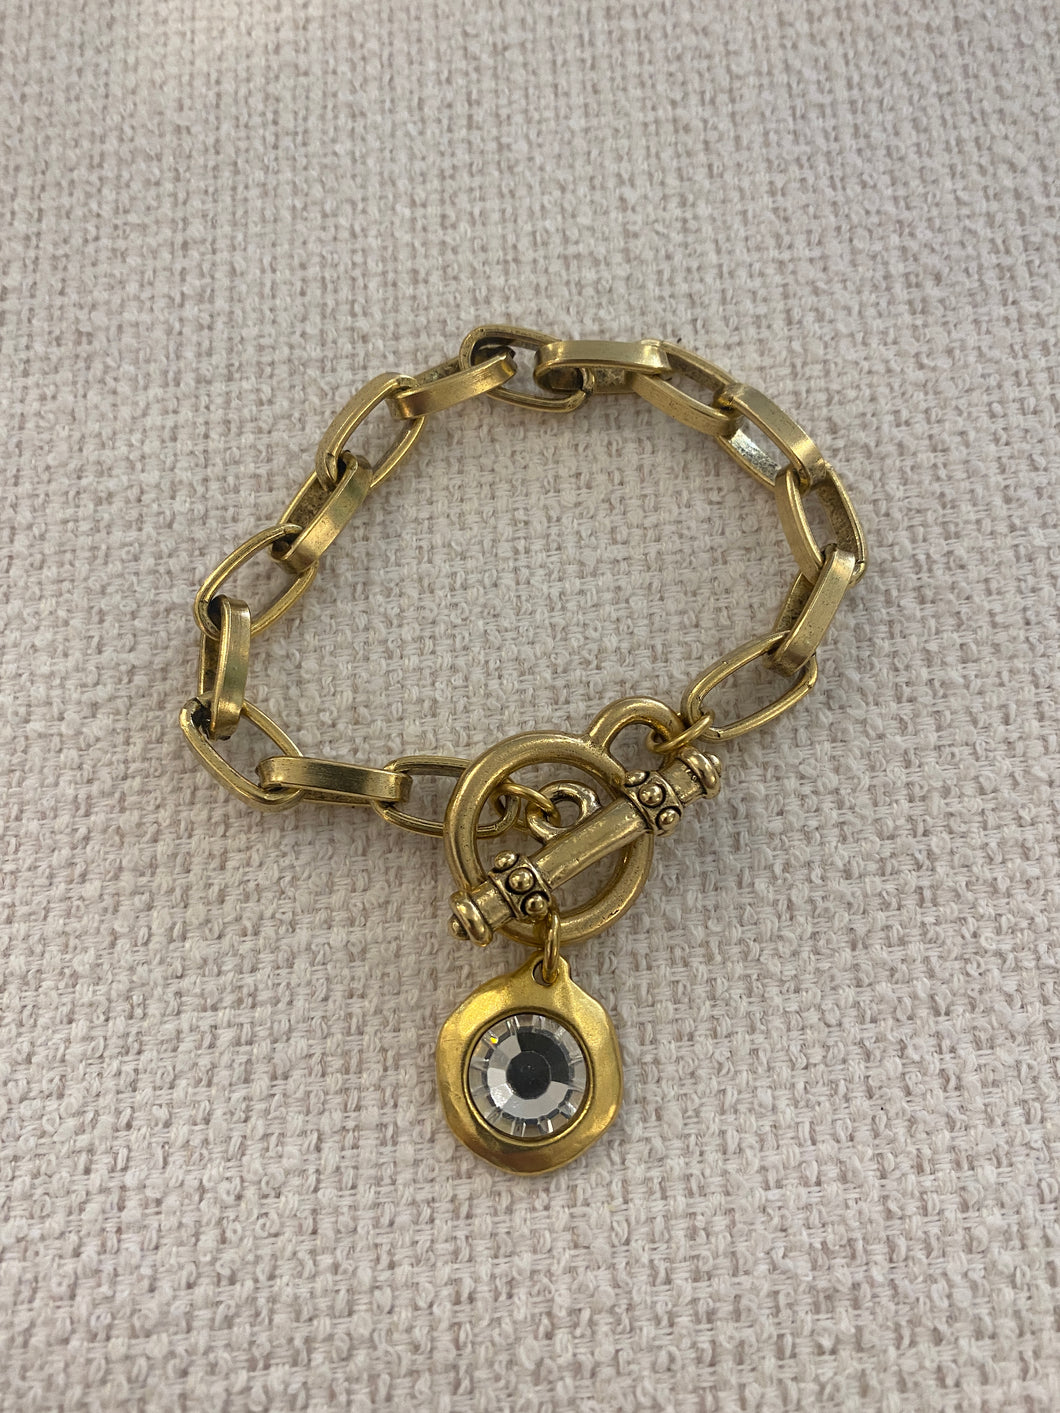 Gold Bracelet W/ Crystal